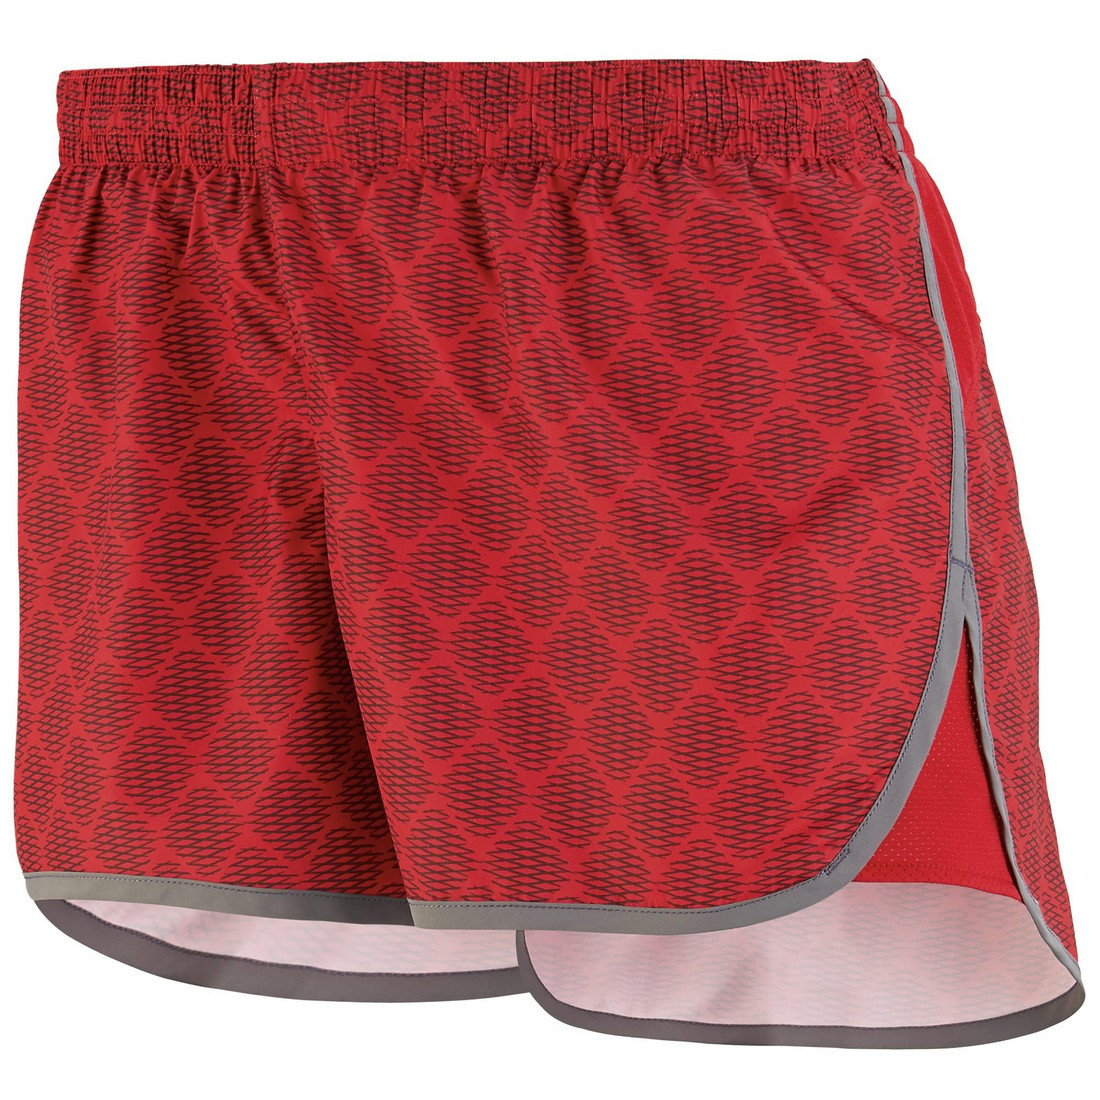 Picture of Augusta 2428A-Red Plexus- Graphite-M Ladies Fysique Short&#44; Red Plexus & Graphite - Medium